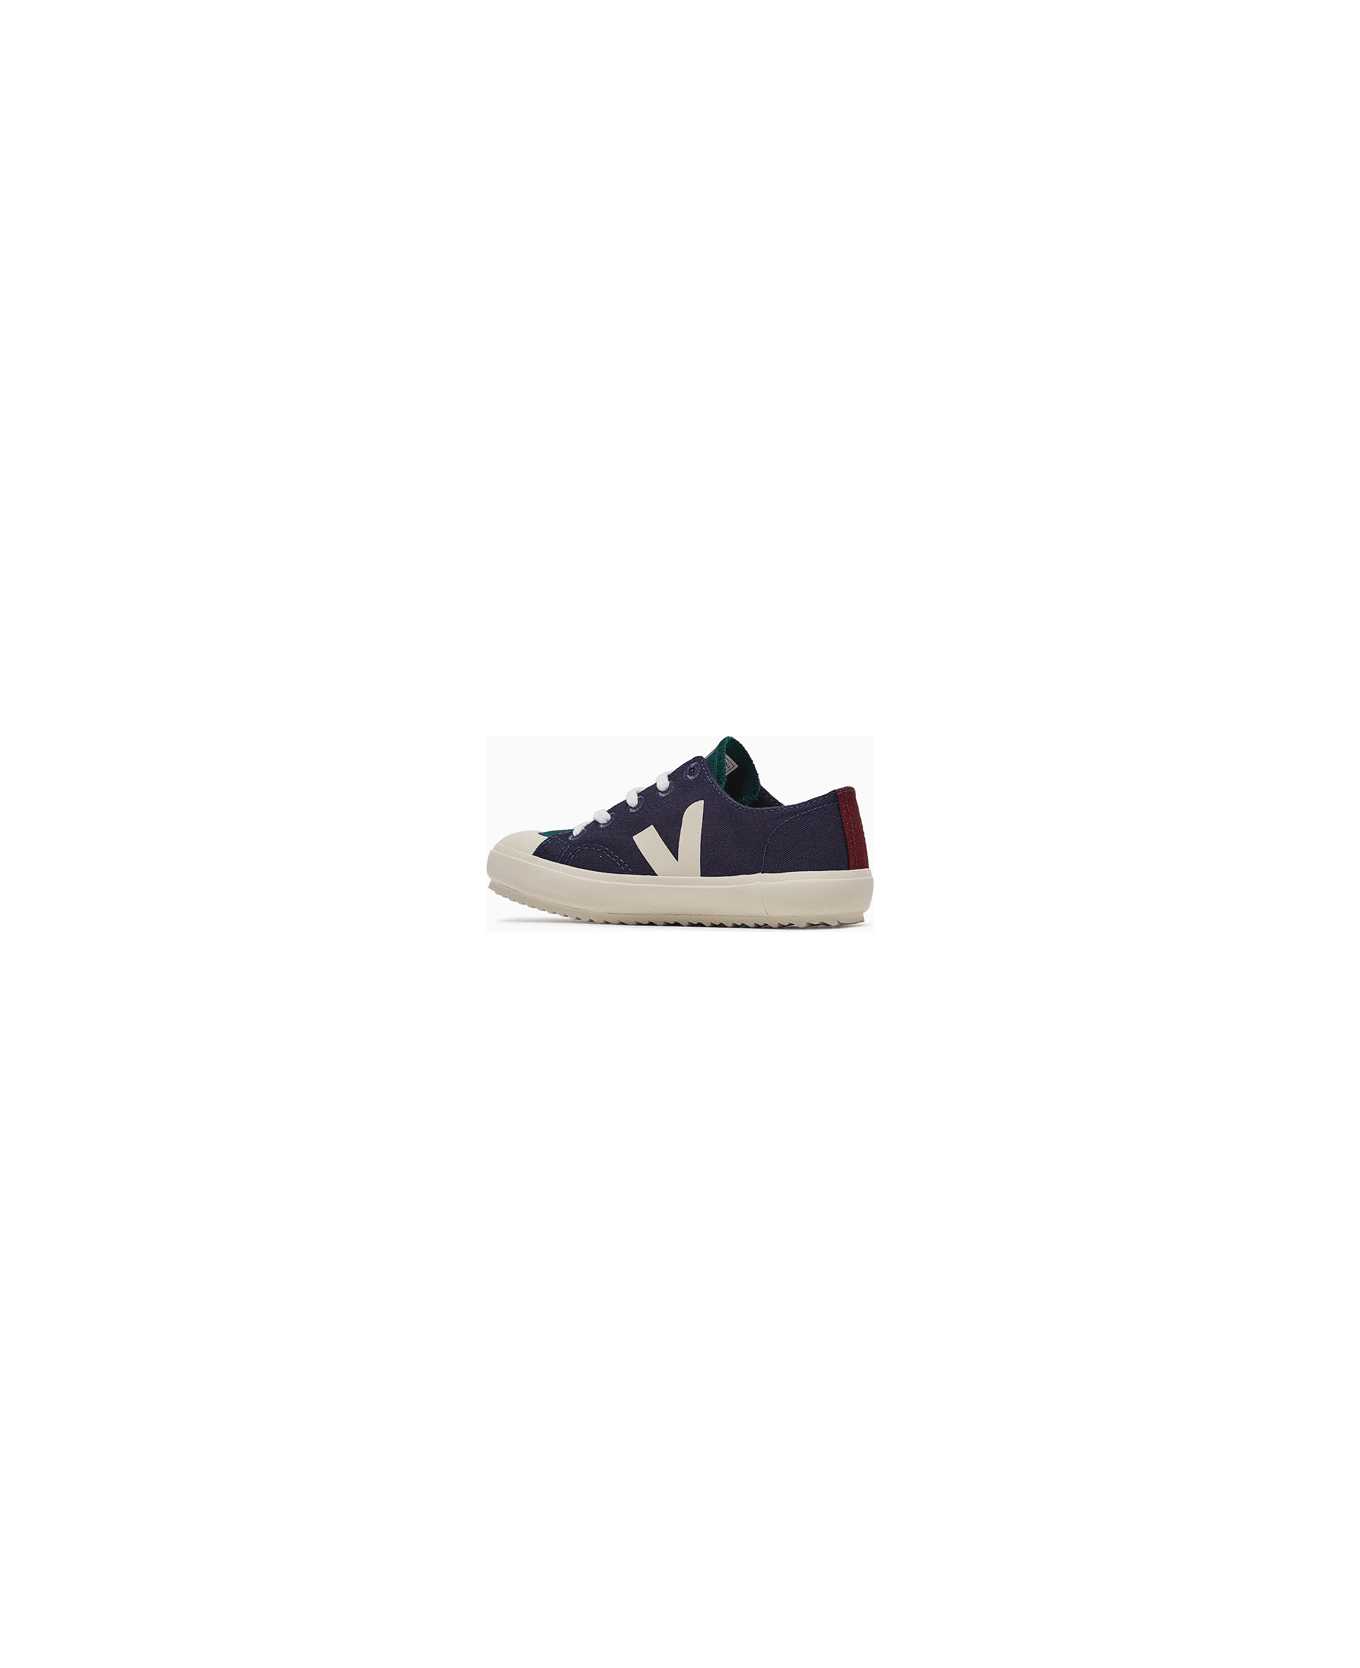 Veja Small Flip Canvas Sneakers Lp0102874c - MARINE